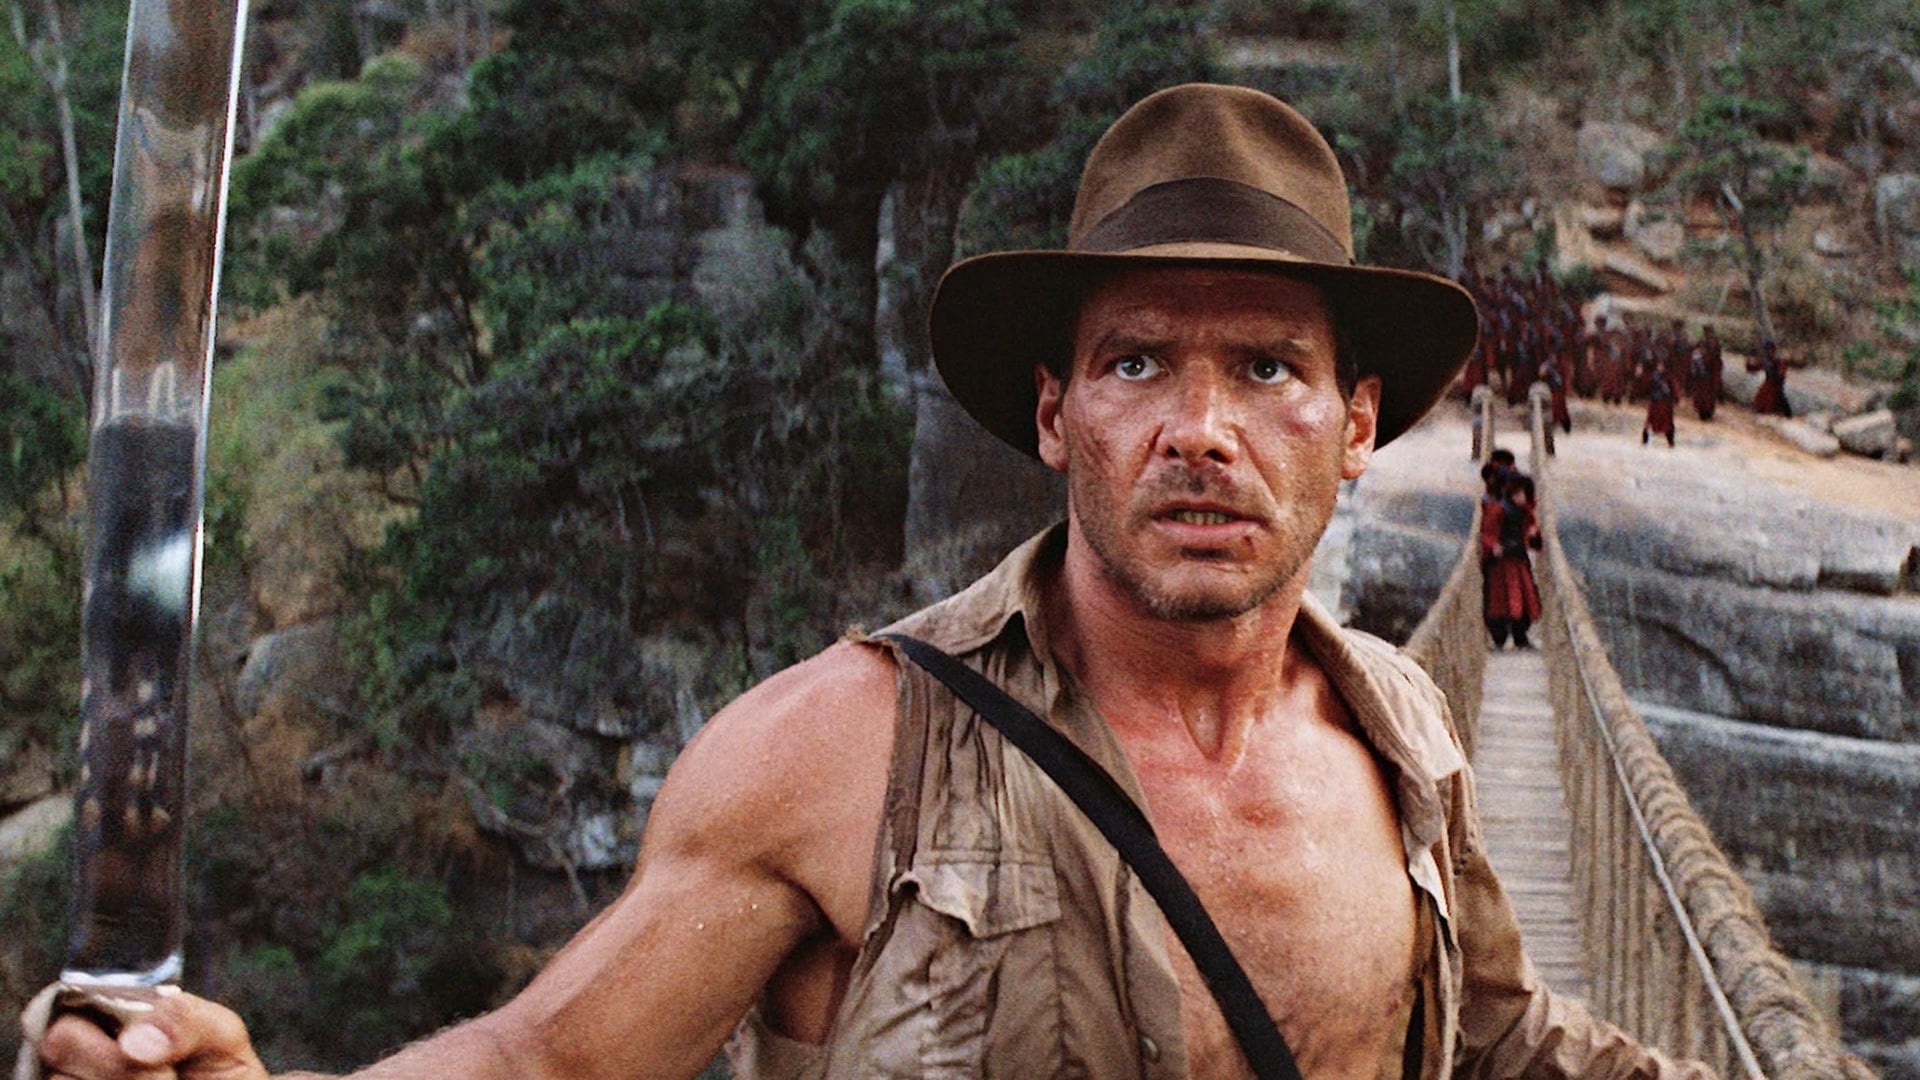 Indiana Jones and the Temple of Doom ขุมทรัพย์สุดขอบฟ้า 2 ตอน ถล่มวิหารเจ้าแม่กาลี